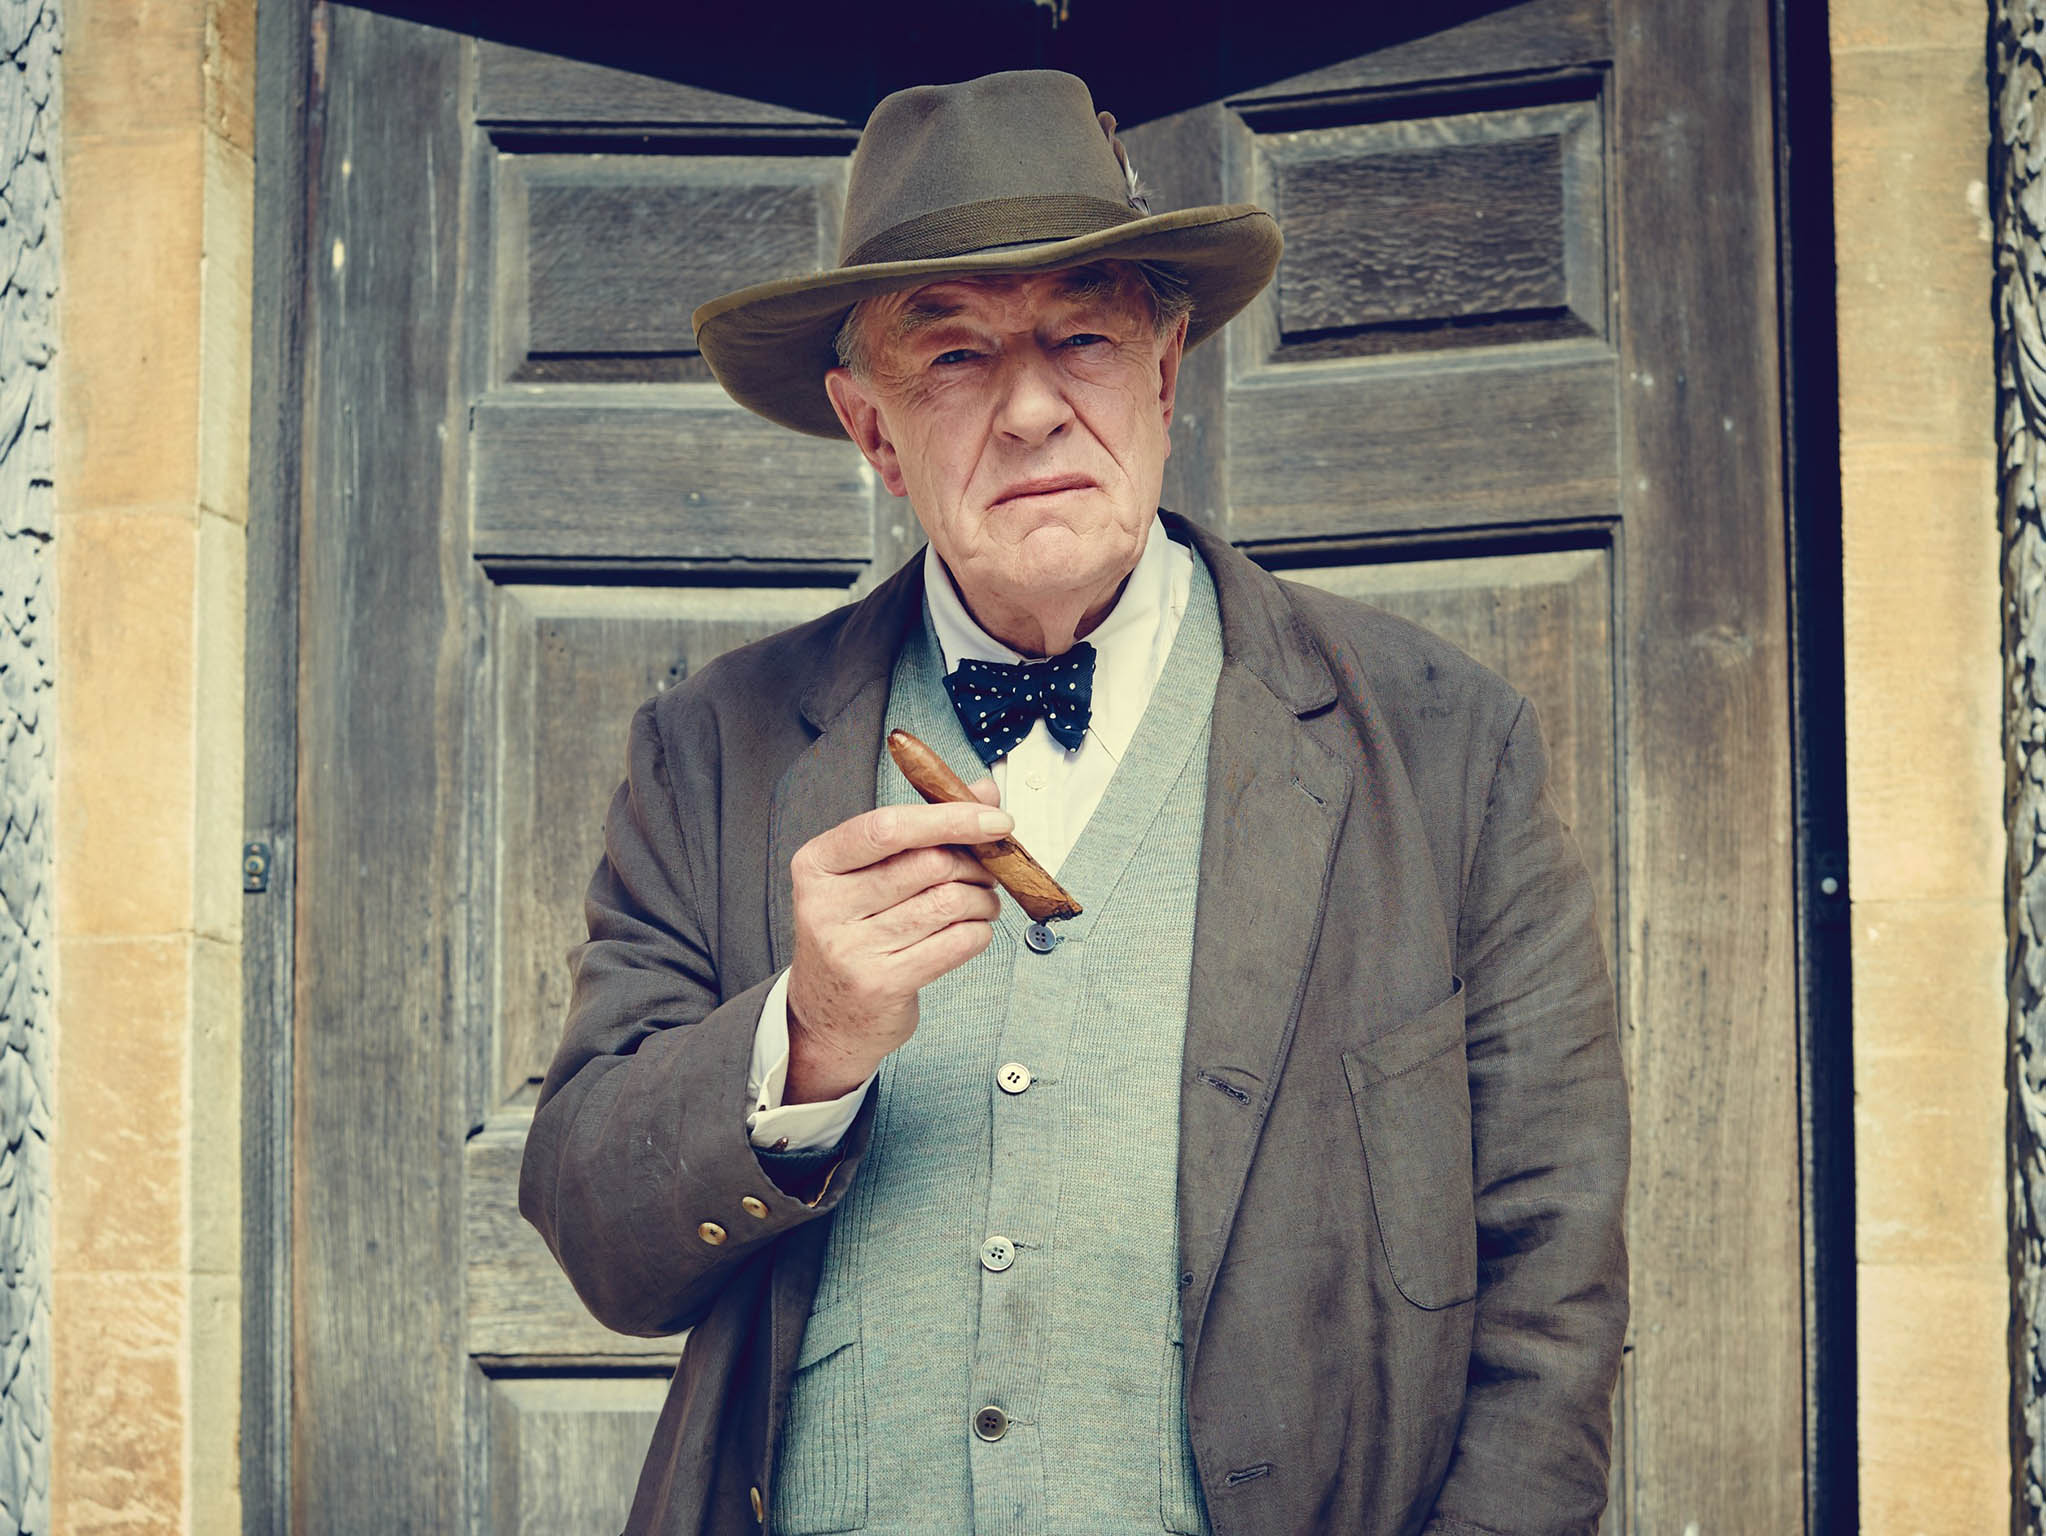 Michael Gambon as Winston Churchill in ITV's new television adaptation